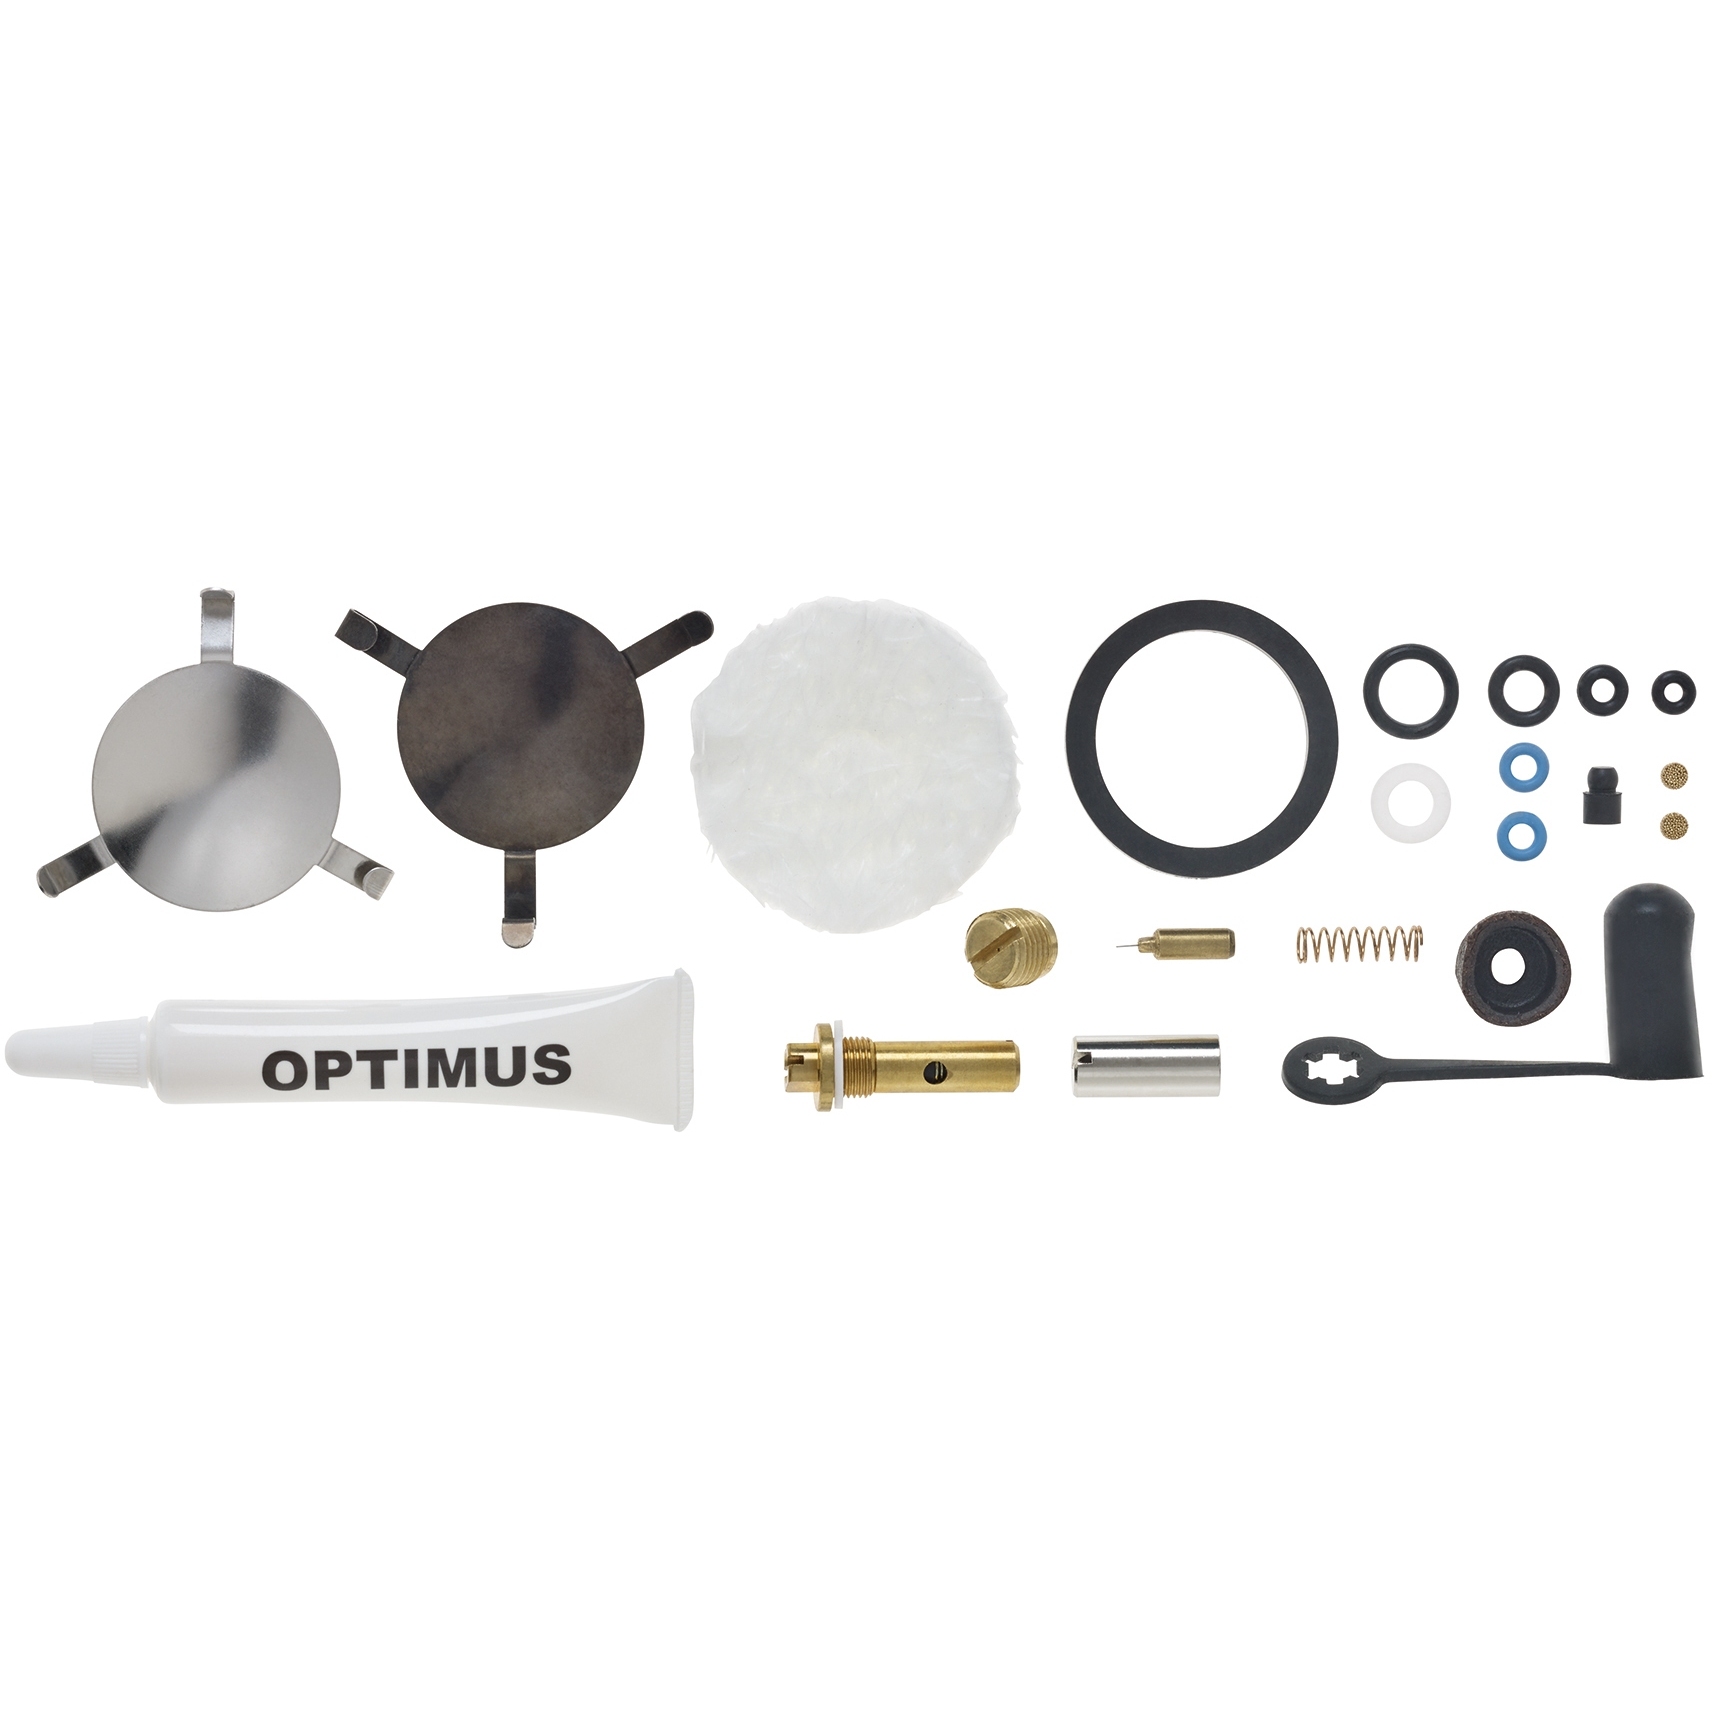 Picture of Optimus Nova, Nova+ &amp; Polaris Spare Parts Kit